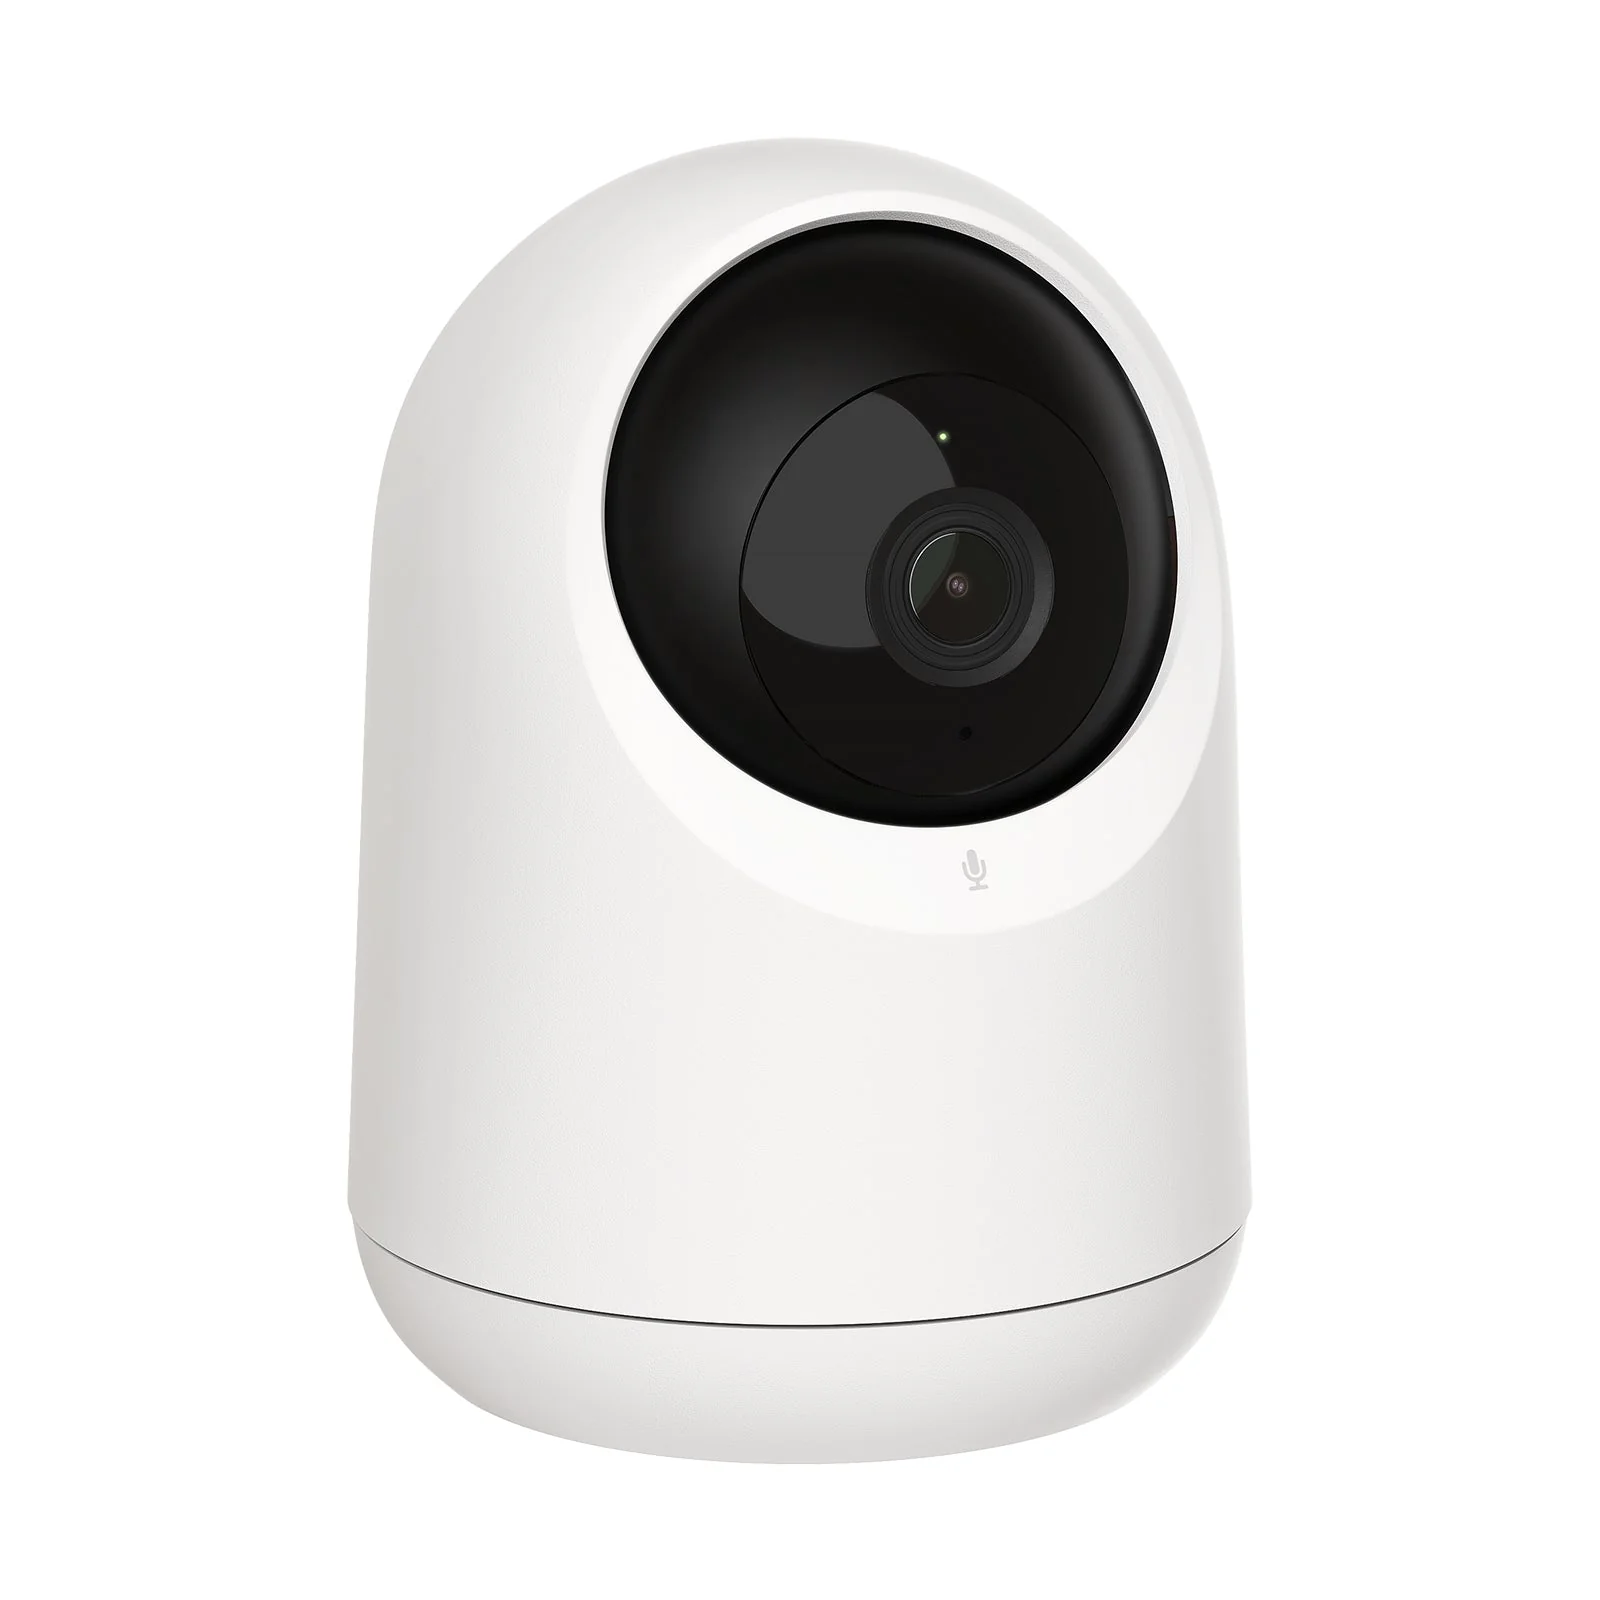 Wansview Indoor Security Camera Q5 Black 2K WiFi IP Camera App Controlled